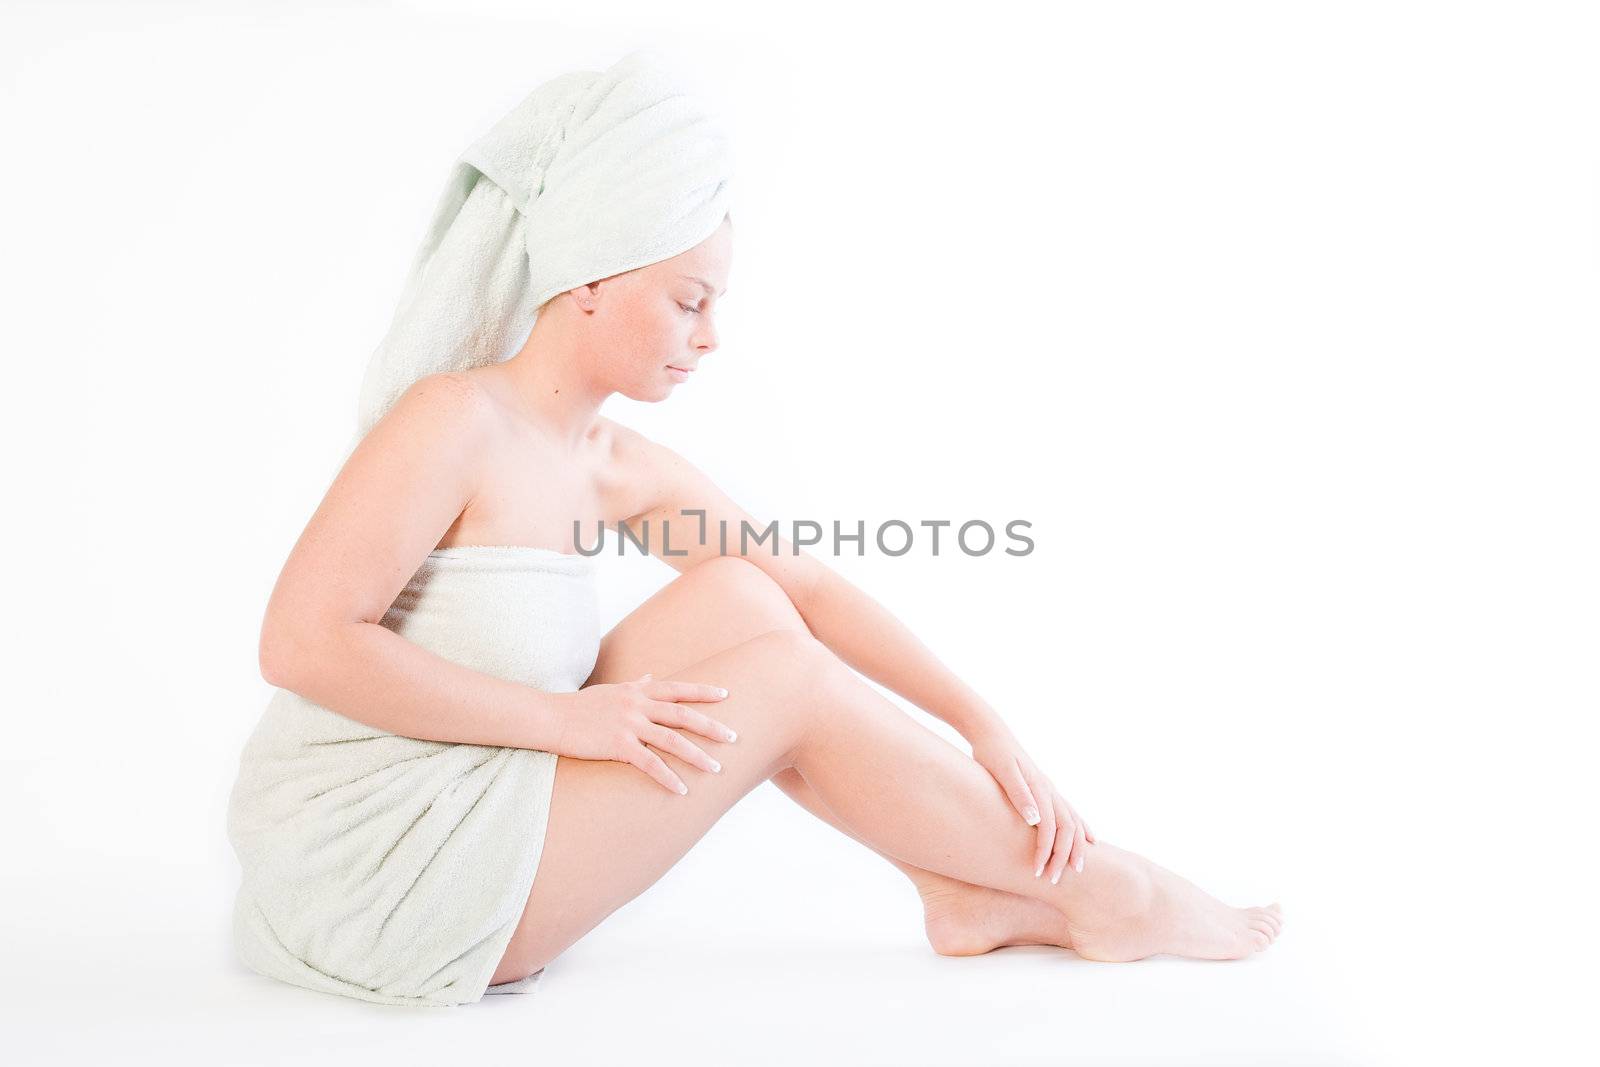 Studio portrait of a spa girl feeling her leg